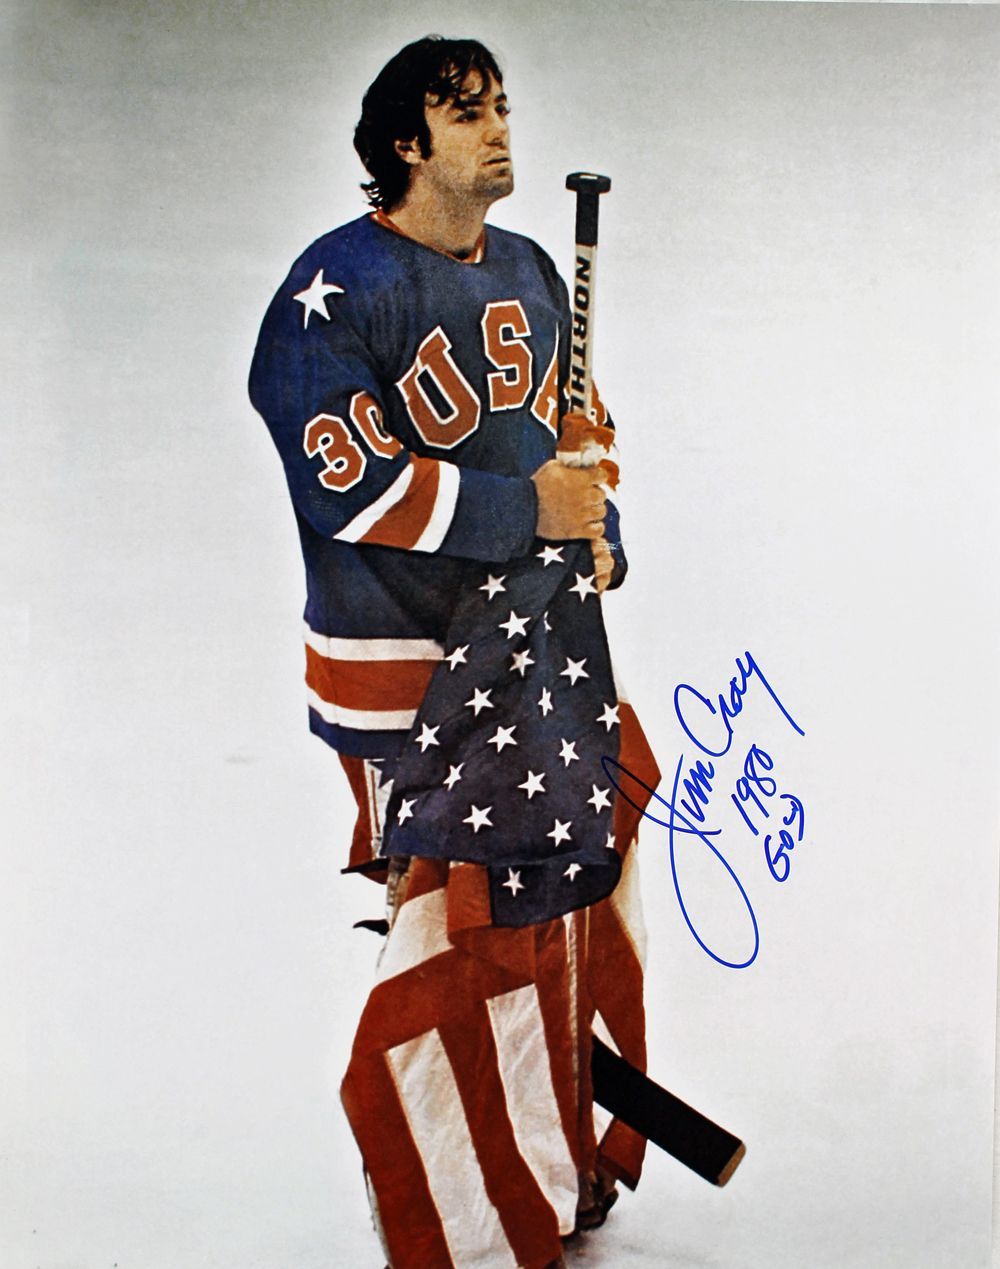 Jim Craig Autographed USA Hockey (White #30) Custom Stitched Jersey wi –  Palm Beach Autographs LLC